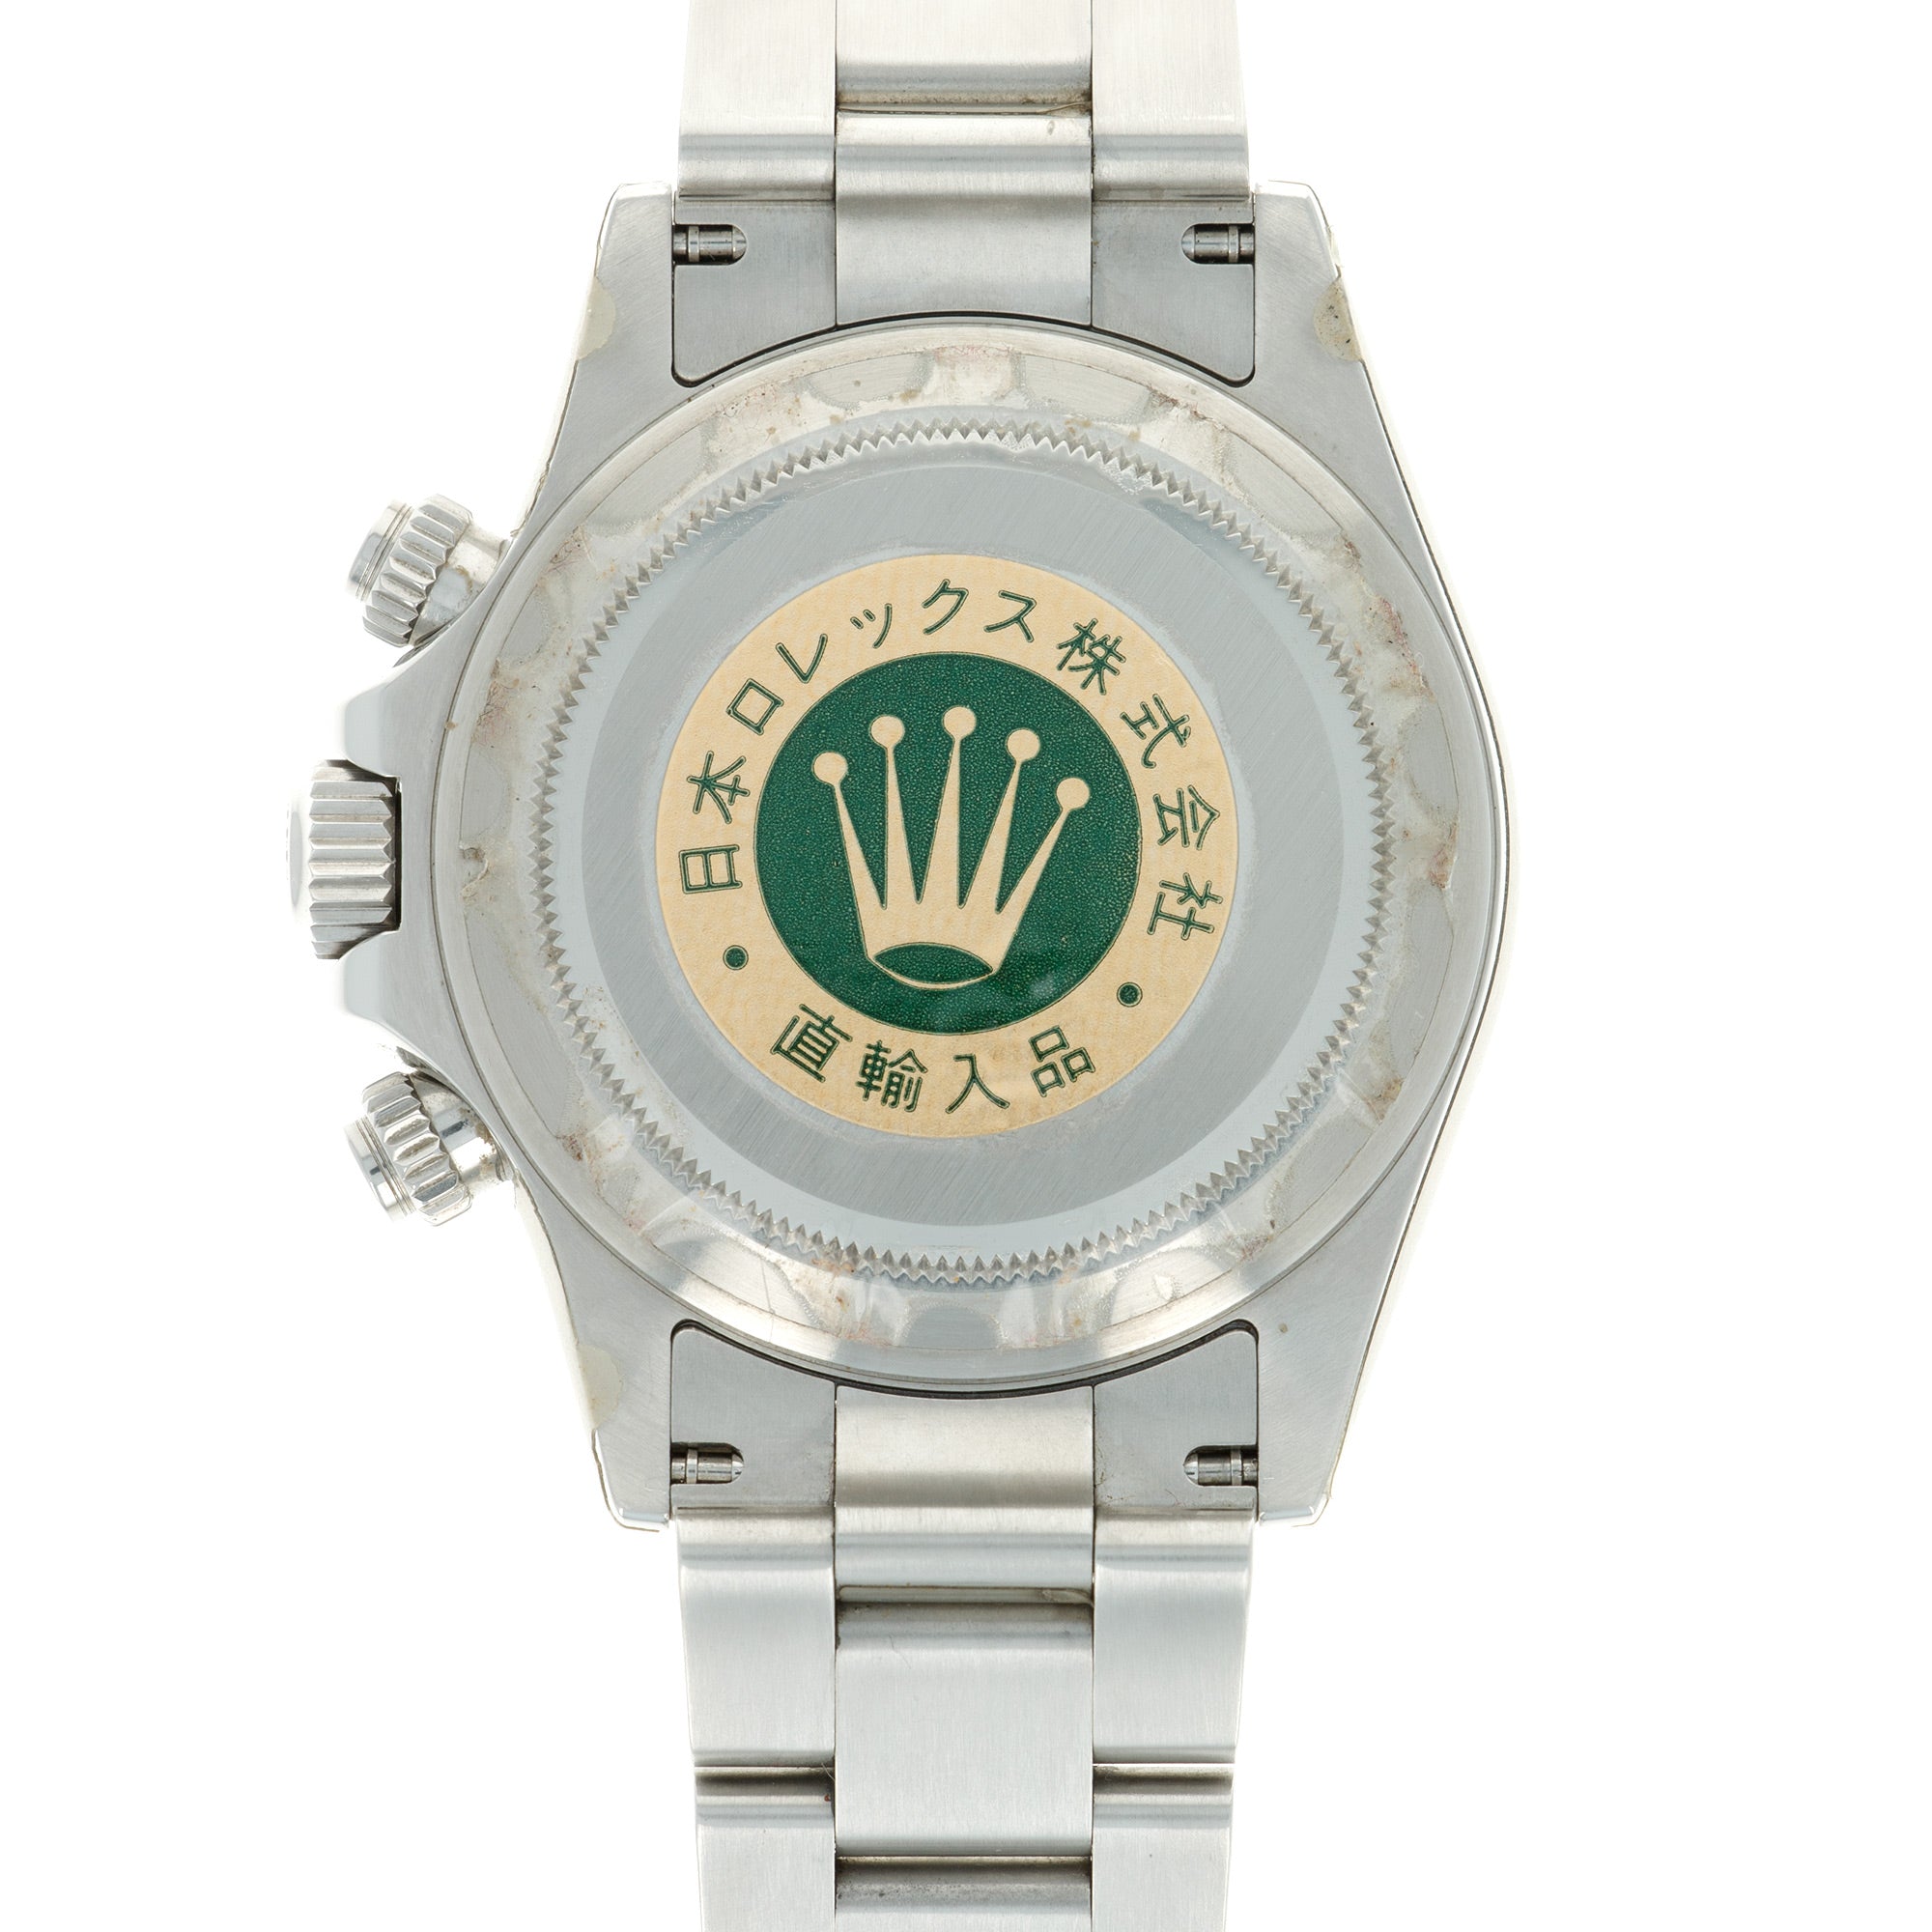 Rolex - Rolex Daytona Steel Ref. 116520 in New Old Stock Condition - The Keystone Watches